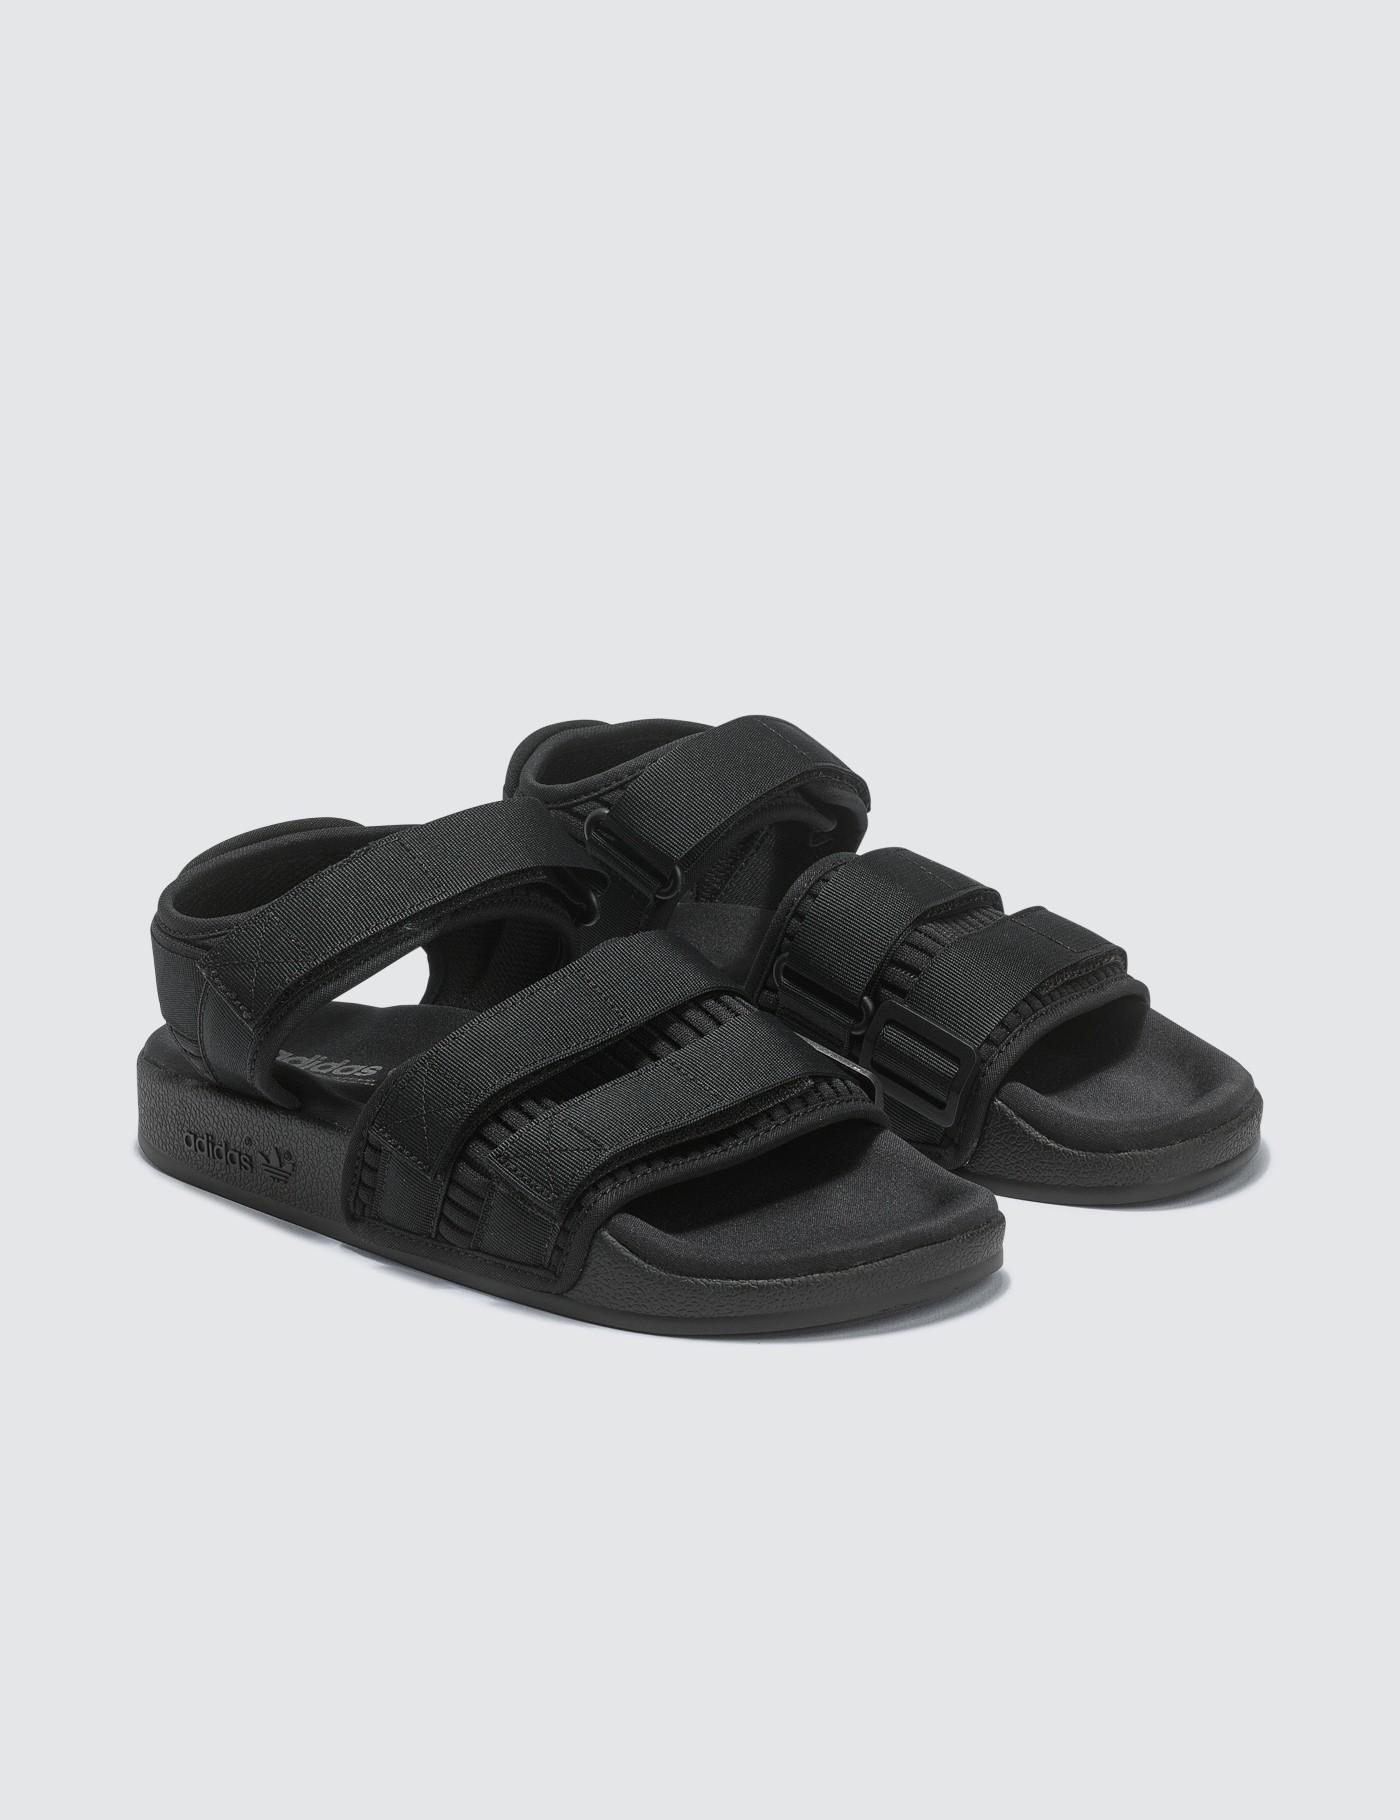 adidas Originals Adilette Sandal 2.0 W in Black - Lyst